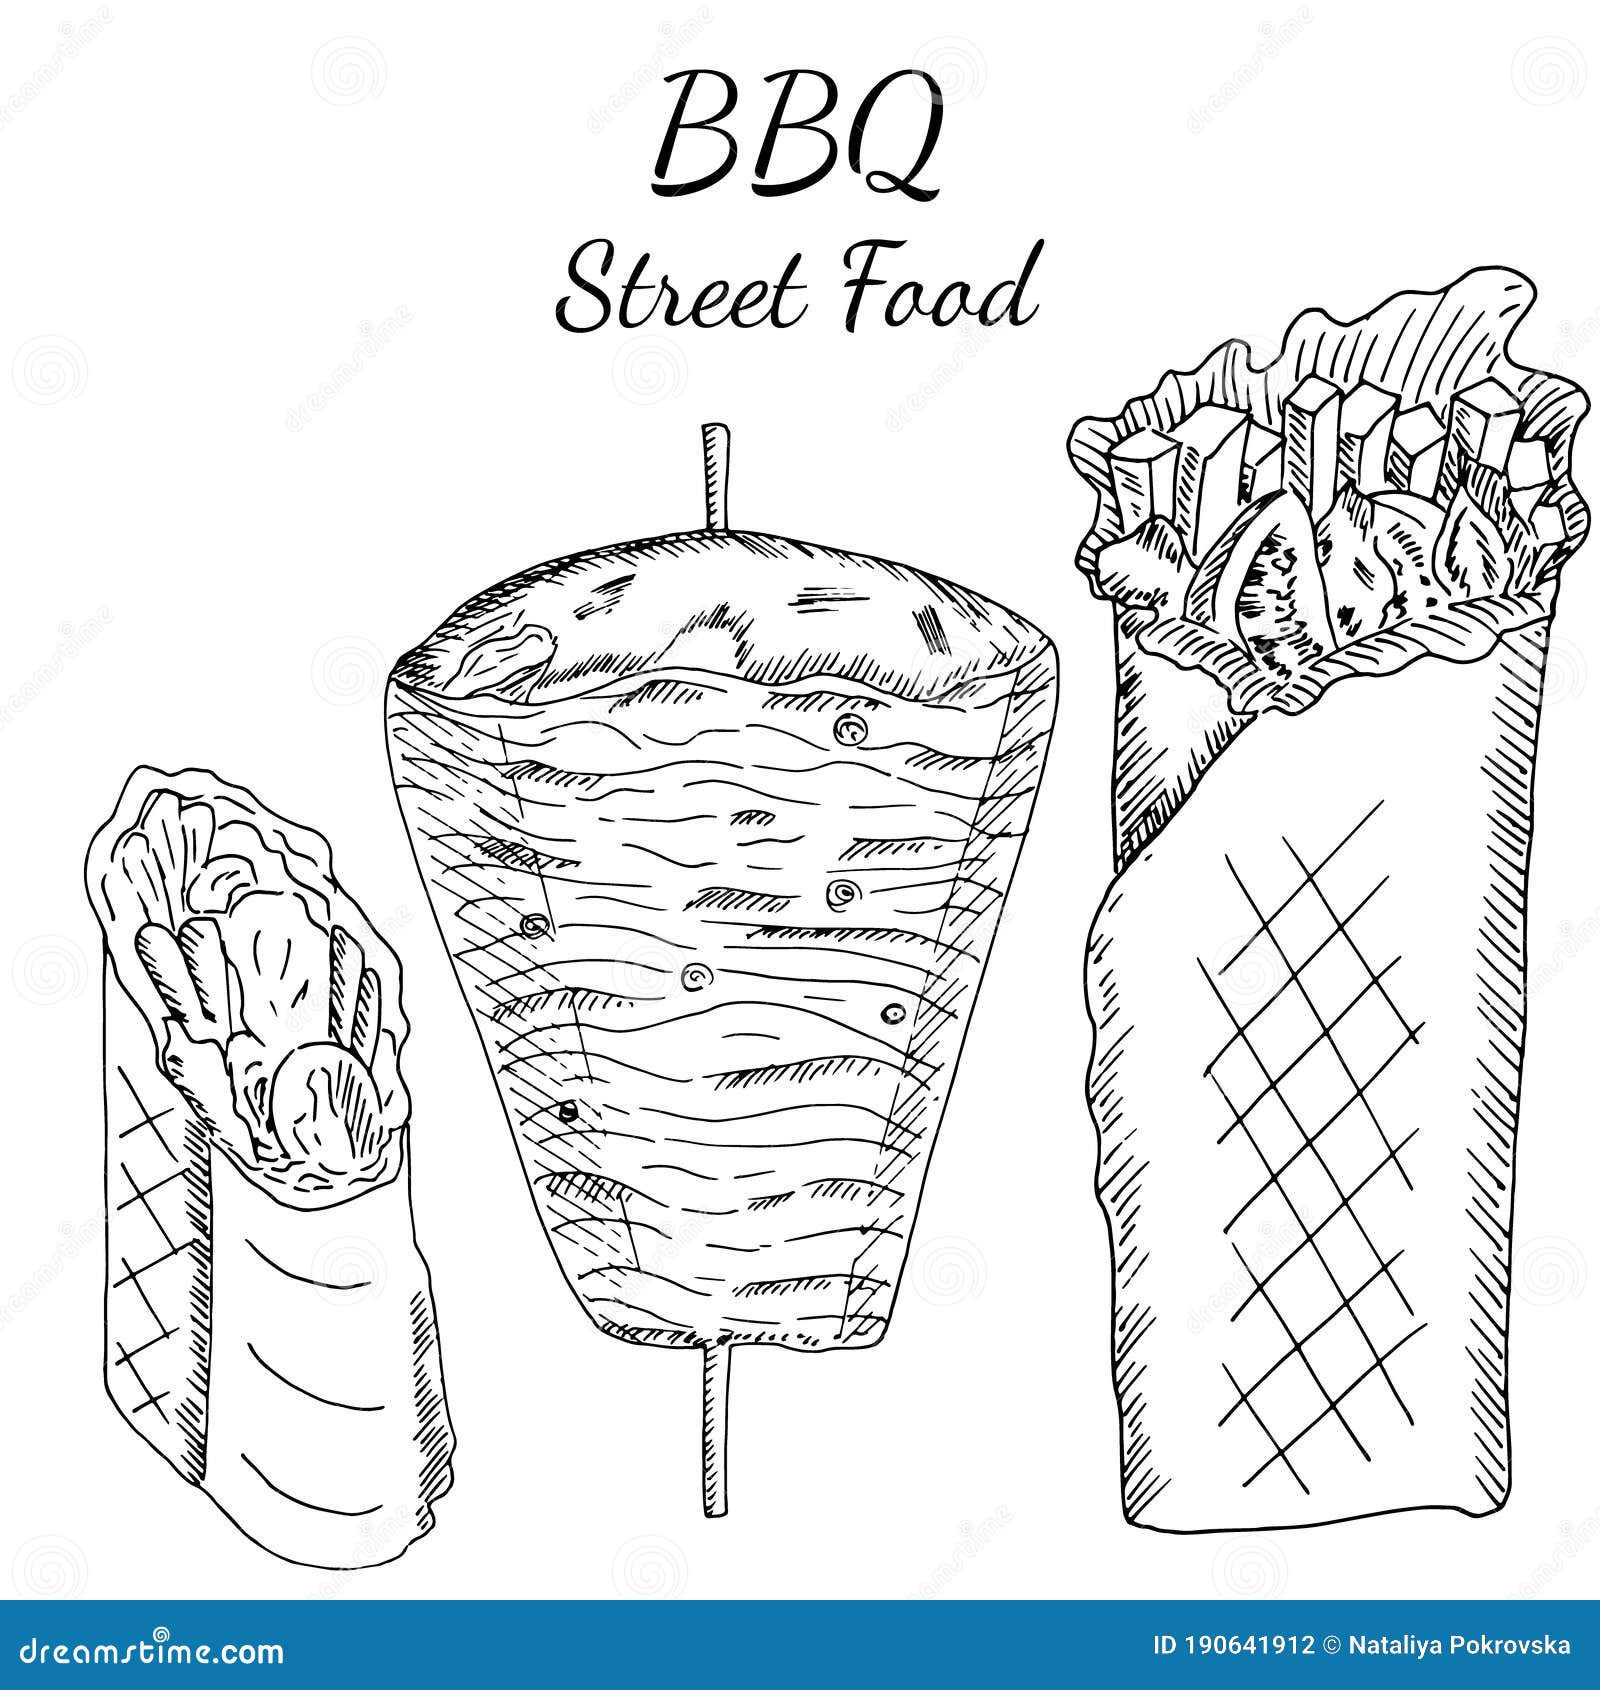 Download Burrito Hand Drawn Sketch Vector Illustration | CartoonDealer.com #71303942